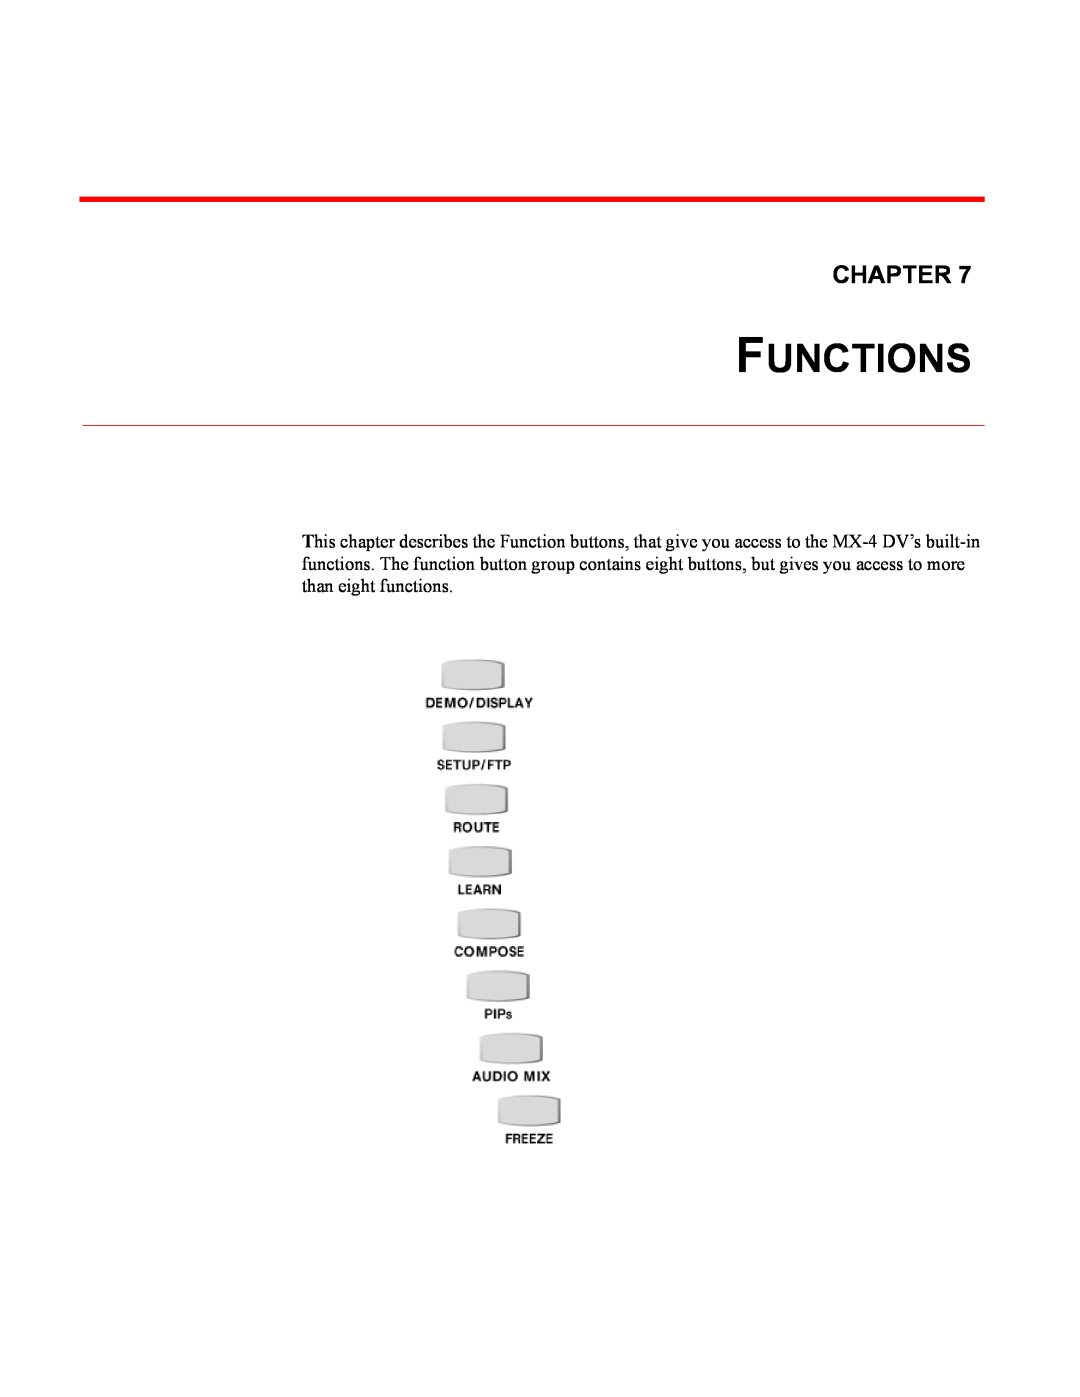 FOCUS Enhancements MX-4DV manual Functions, Chapter 